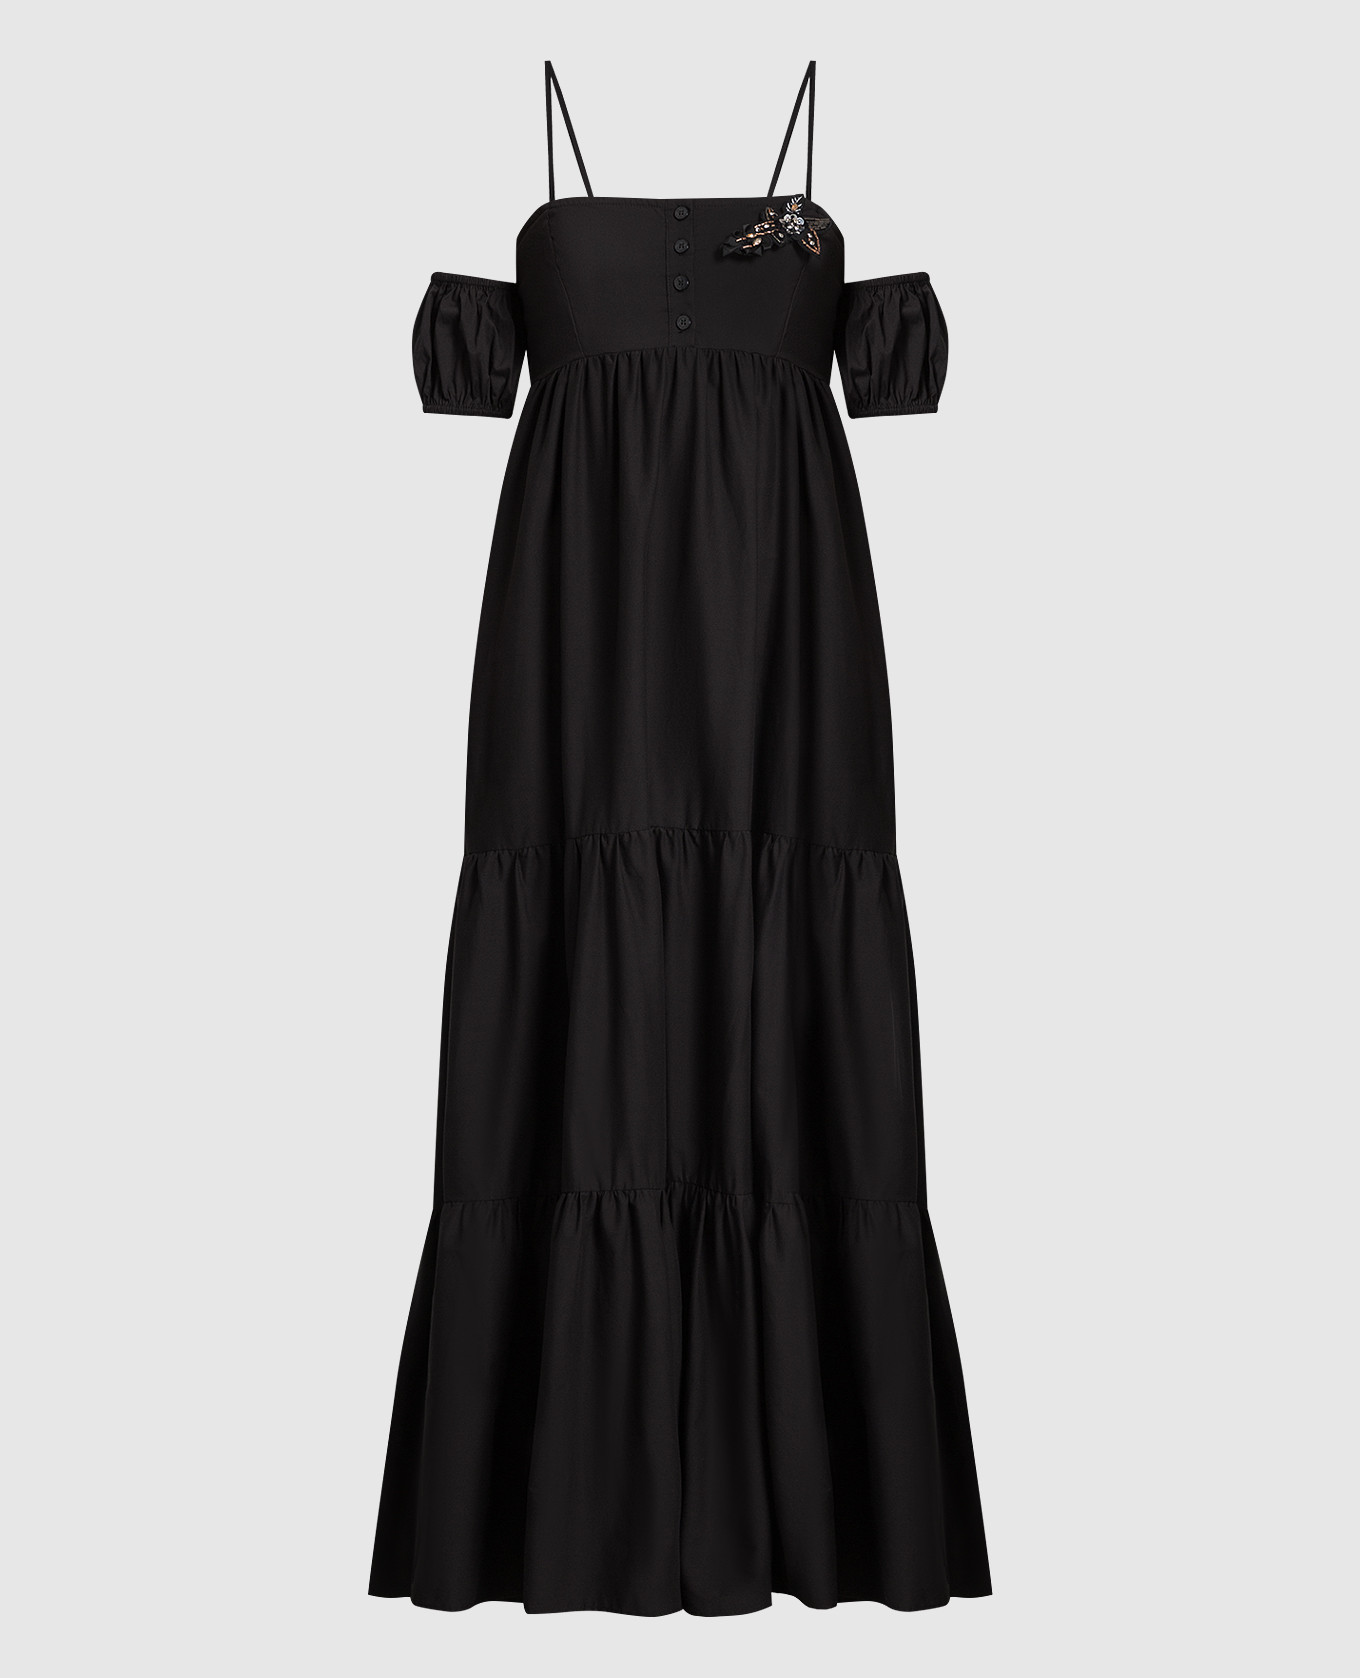 Black dress with frills